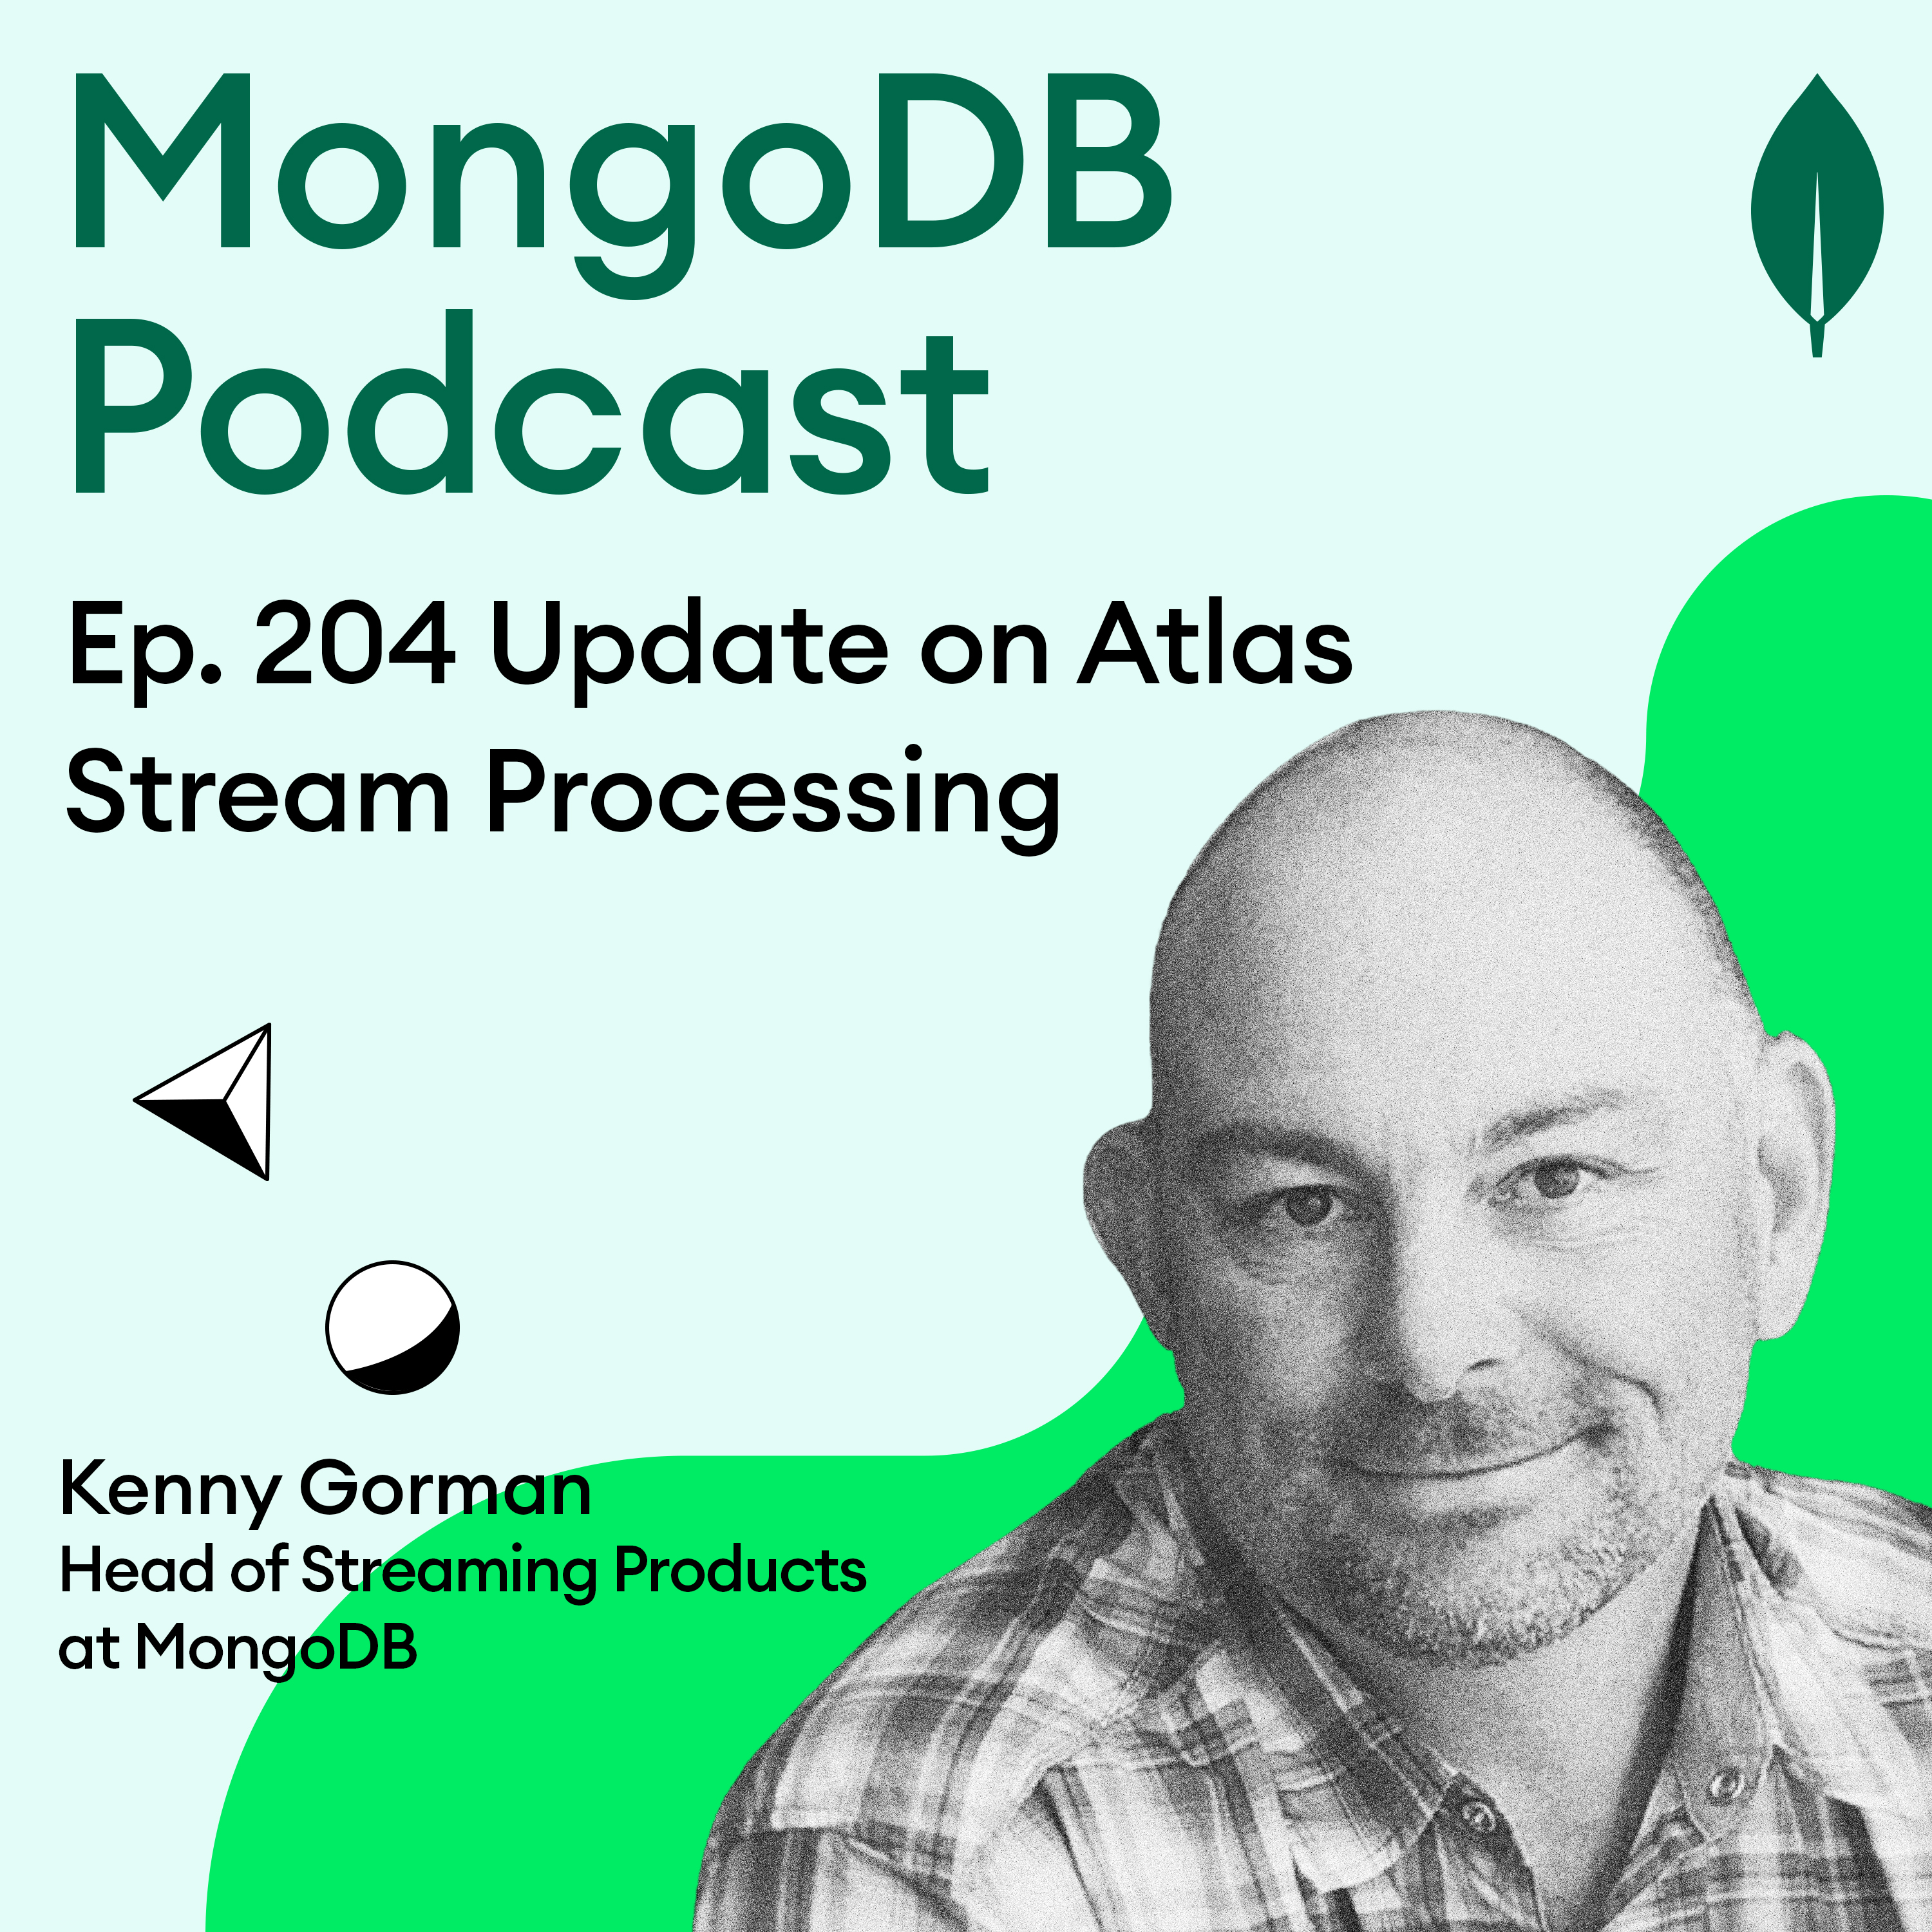 Ep. 204 Streamlining Data: Inside MongoDB’s Atlas Stream Processing with Kenny Gorman